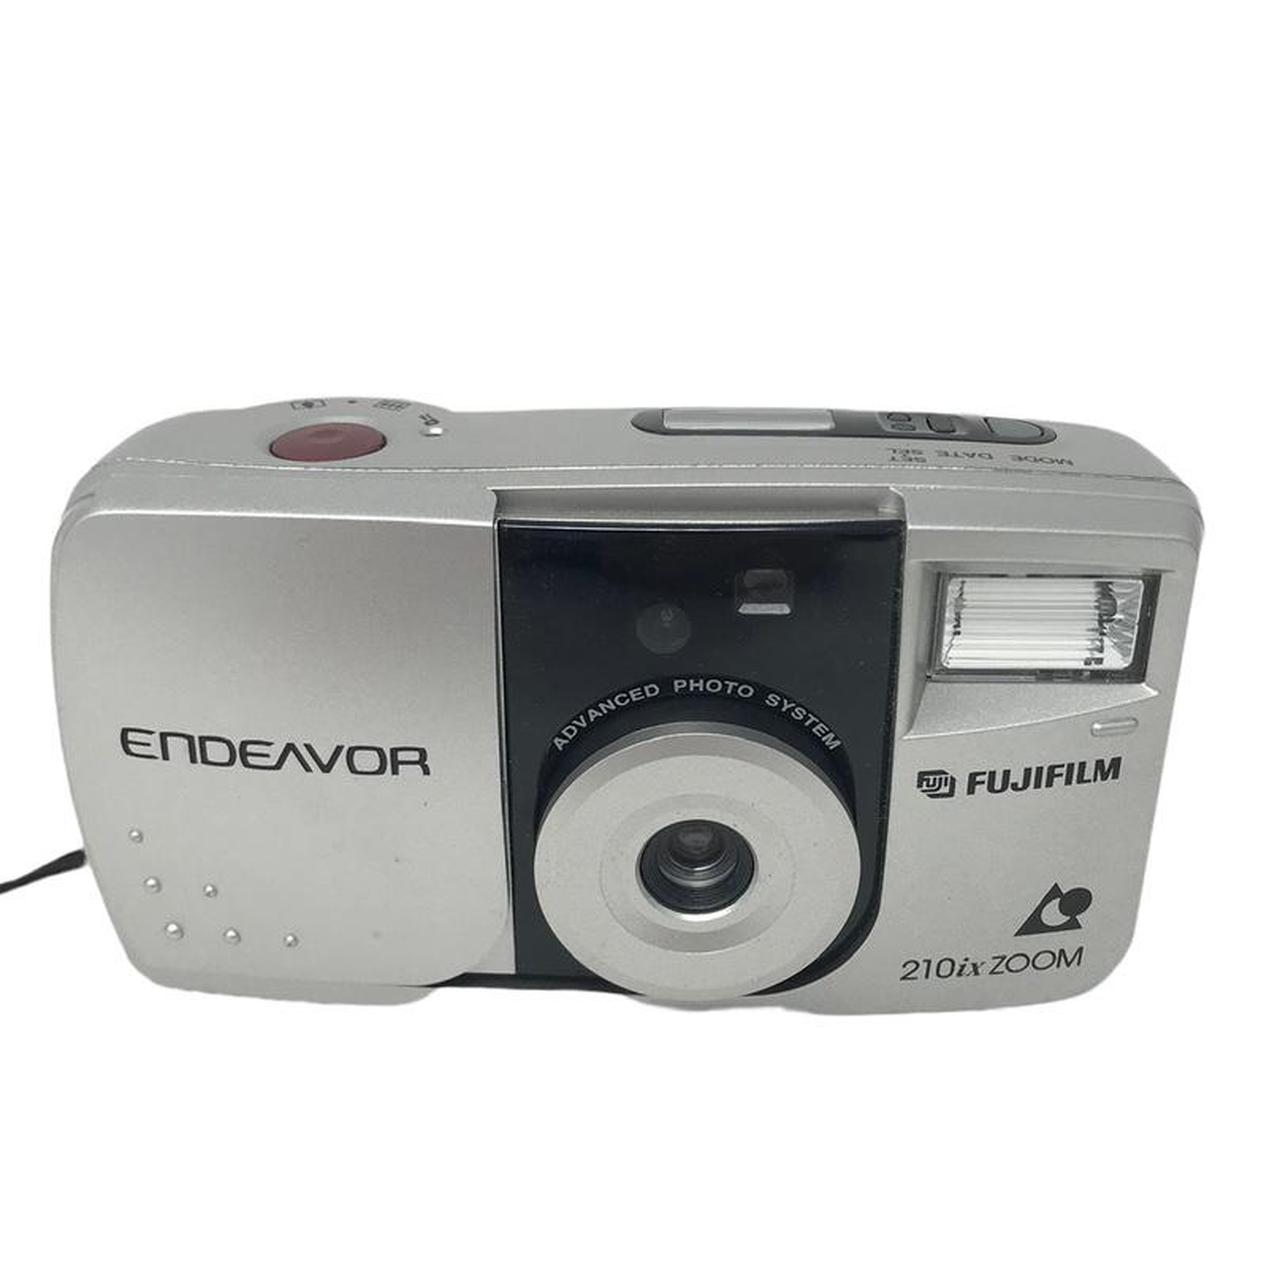 Product Image 2 - Fuji Fujifilm Endeavor Film Camera

New